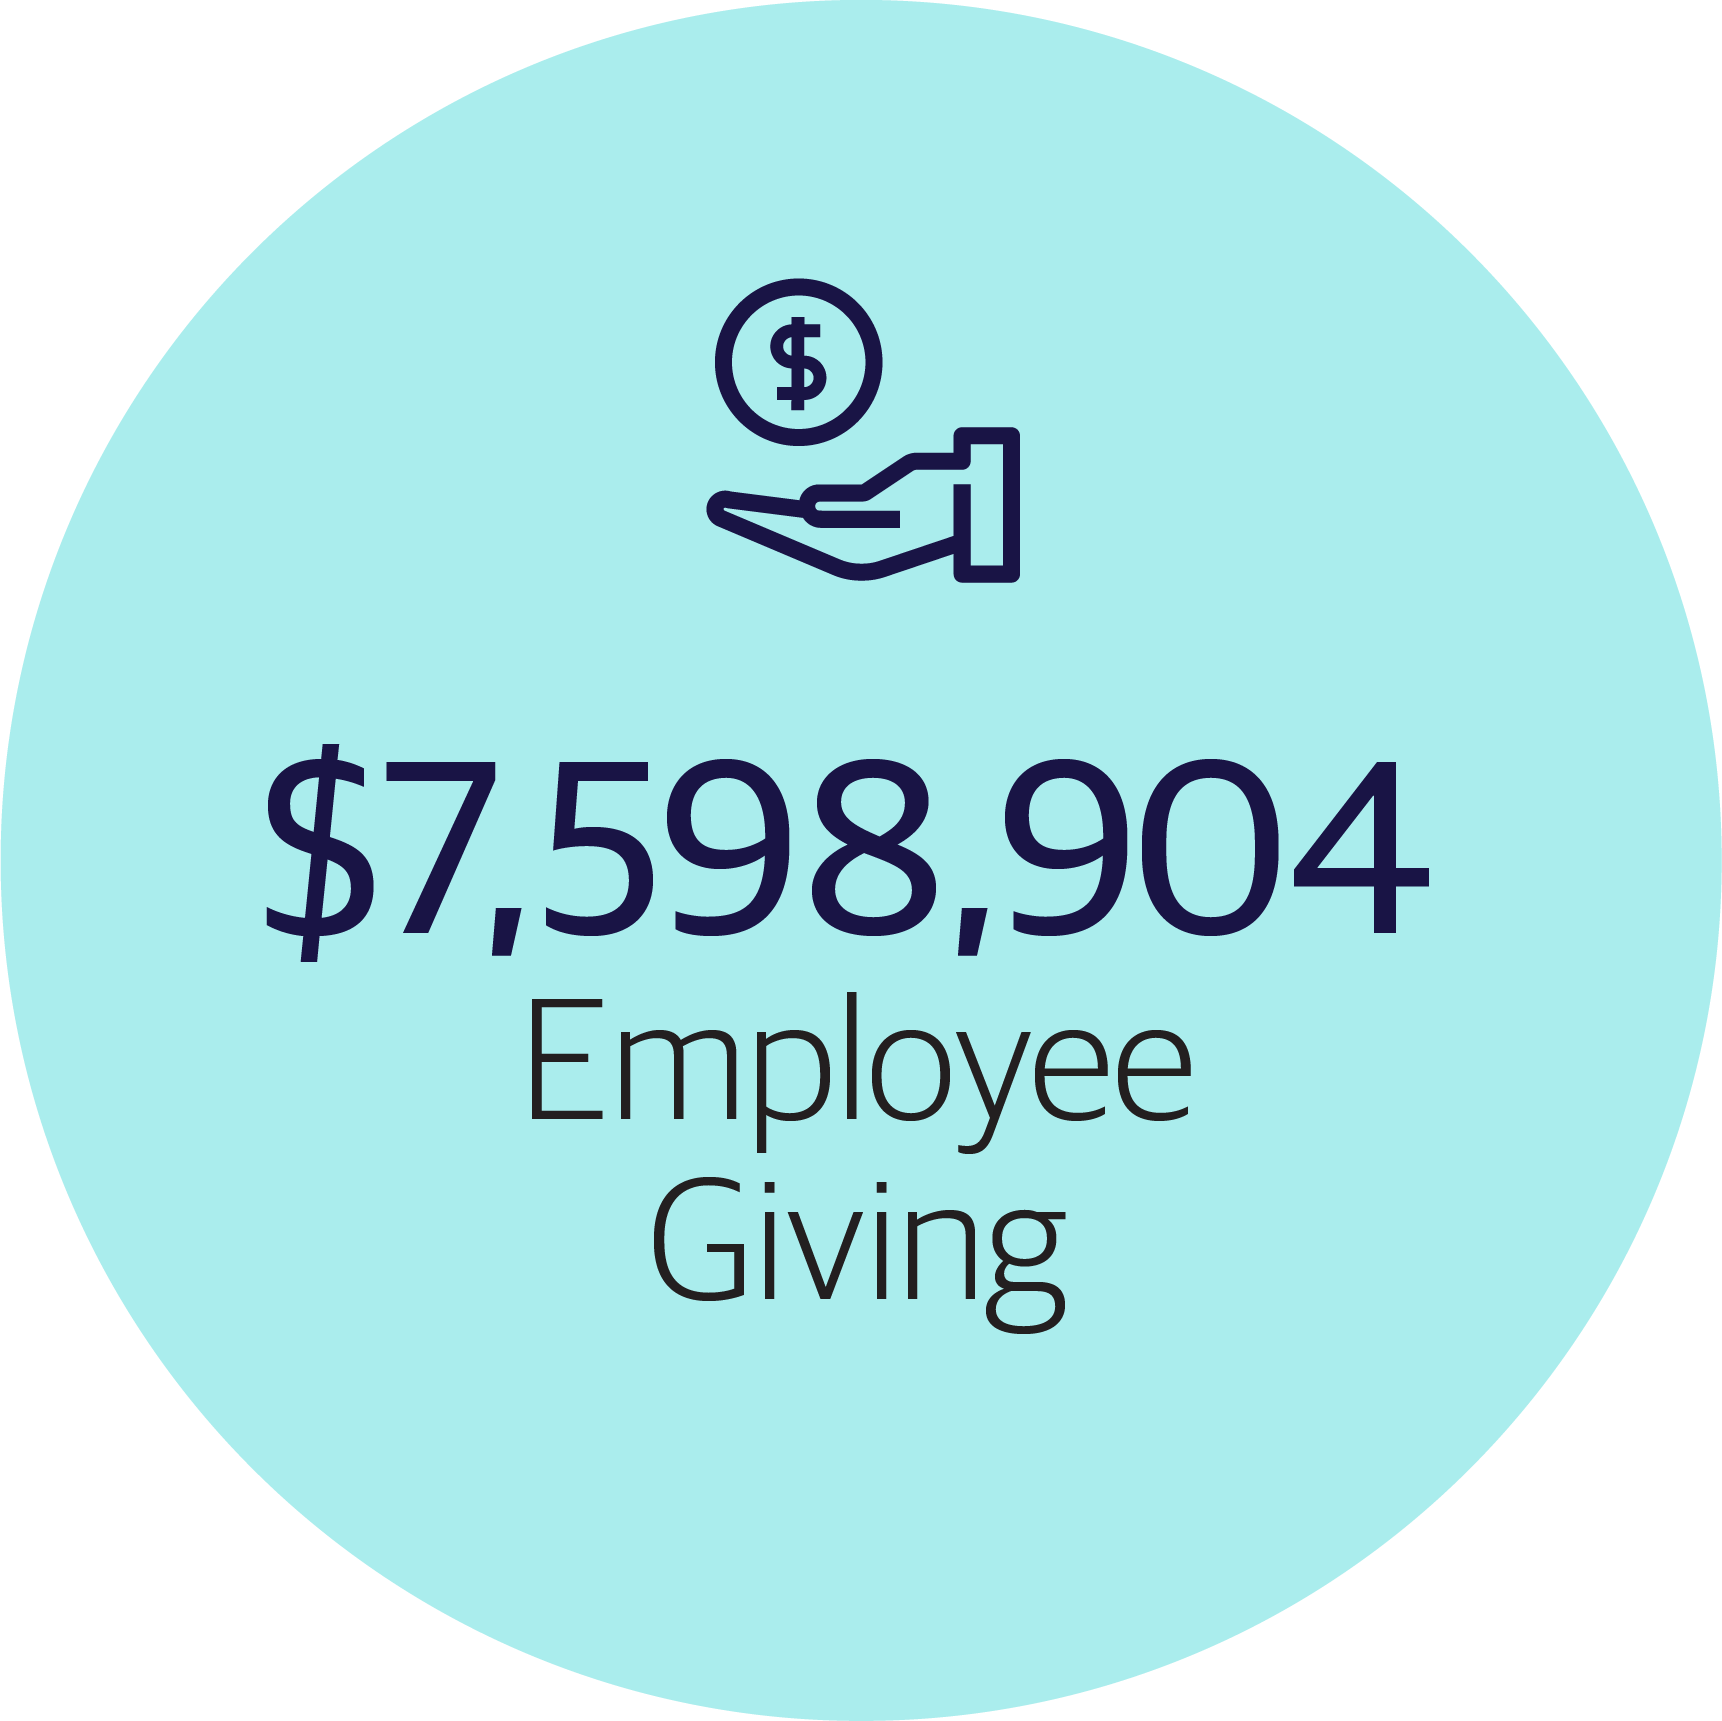 $7,598,904 in Employee Giving